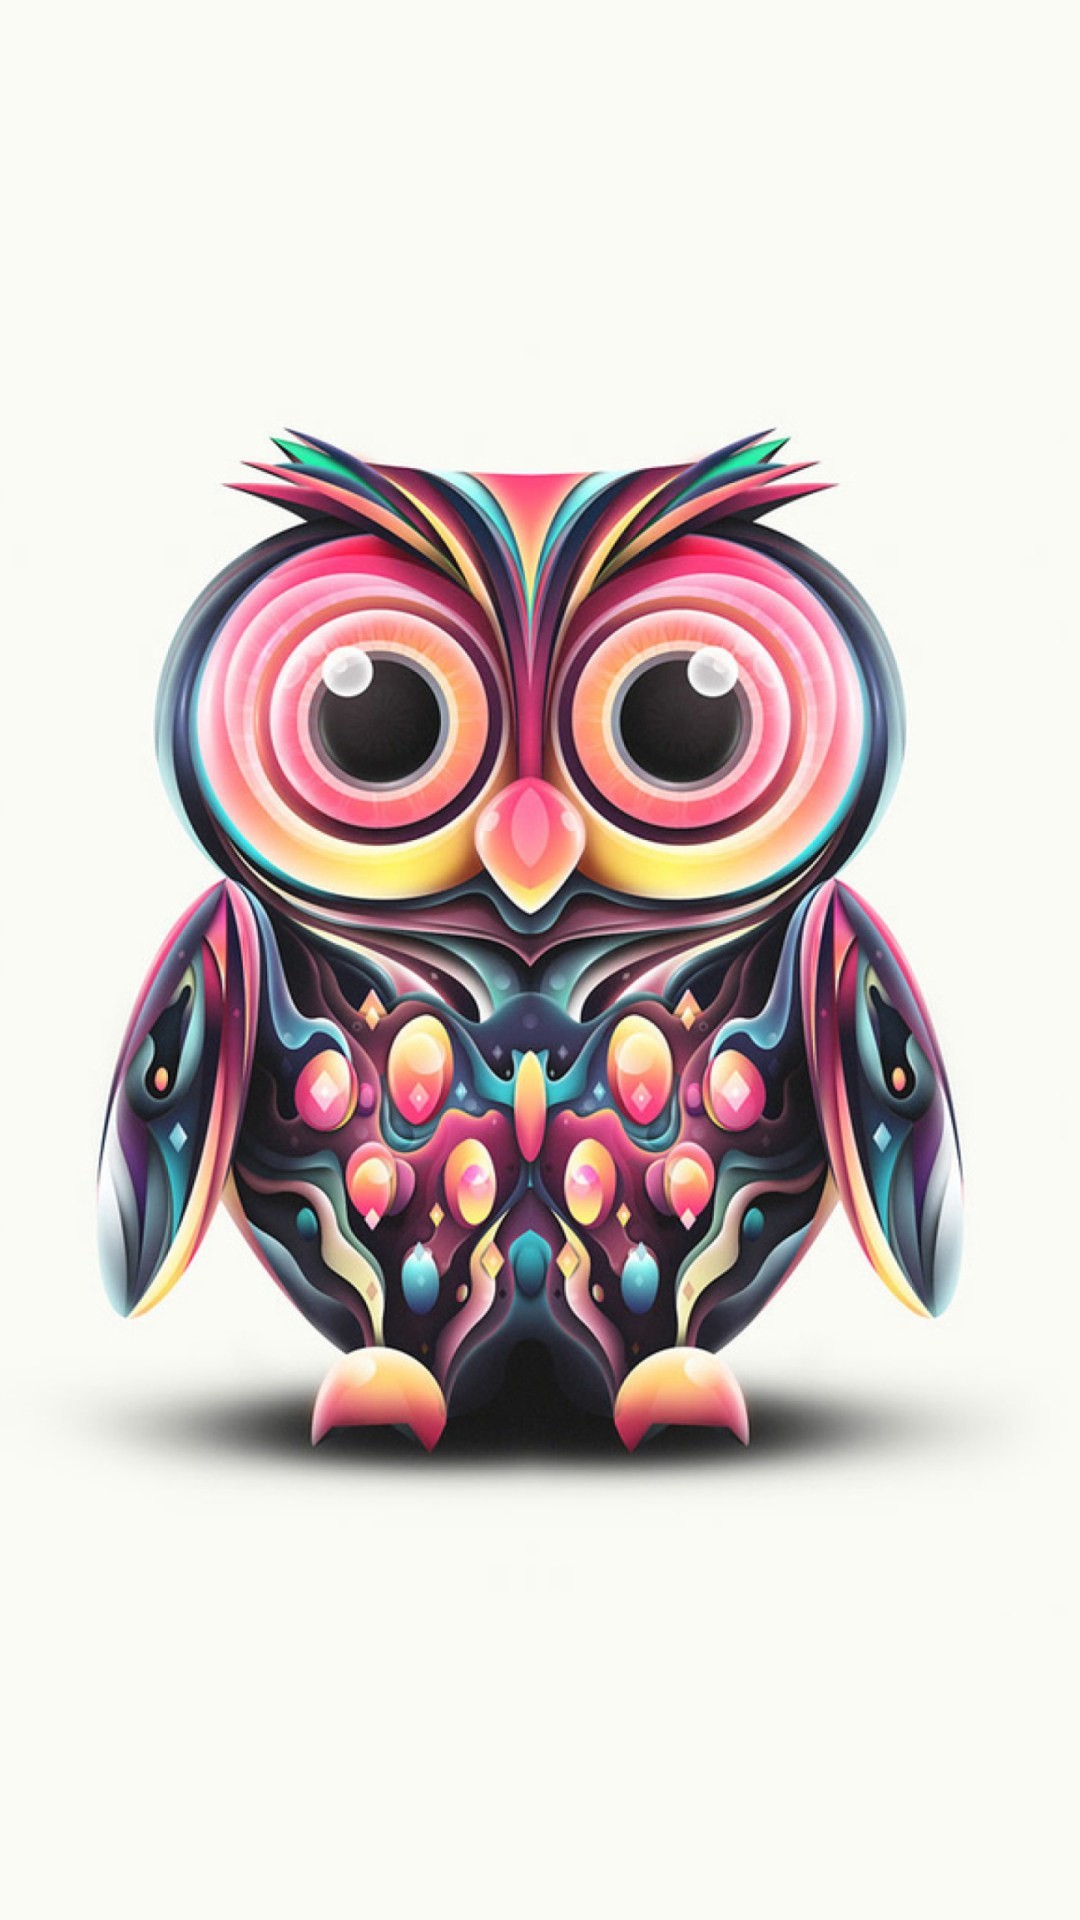 1080x1920 Hd Cute Owl Wallpaper For Android Pixelstalk Net